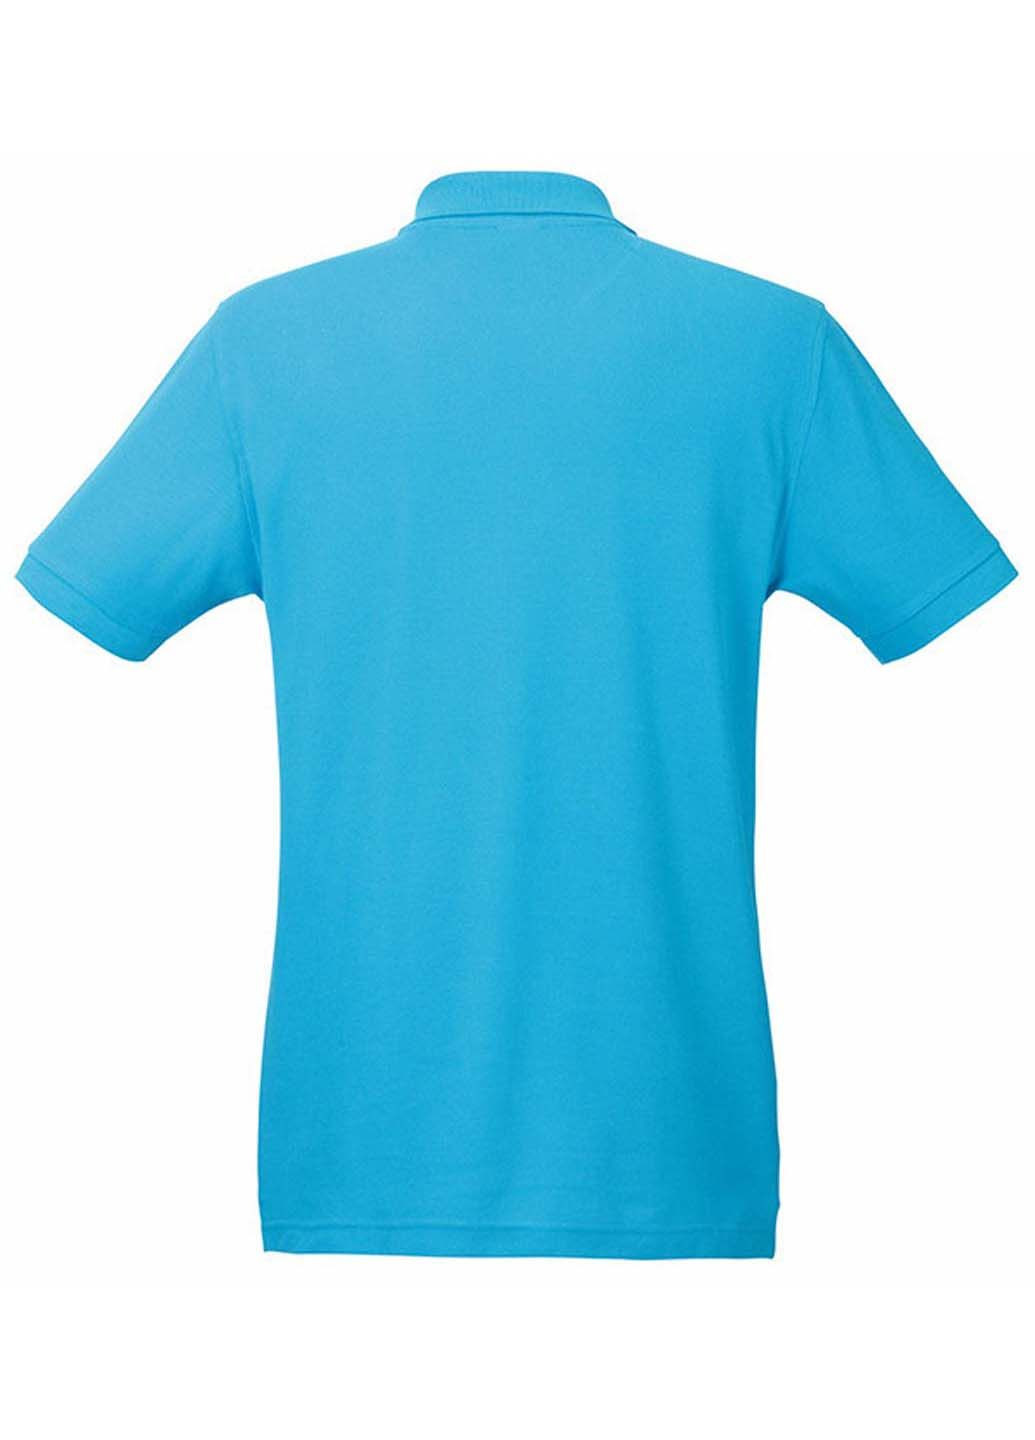 Голубой футболка-поло для мужчин Fruit of the Loom